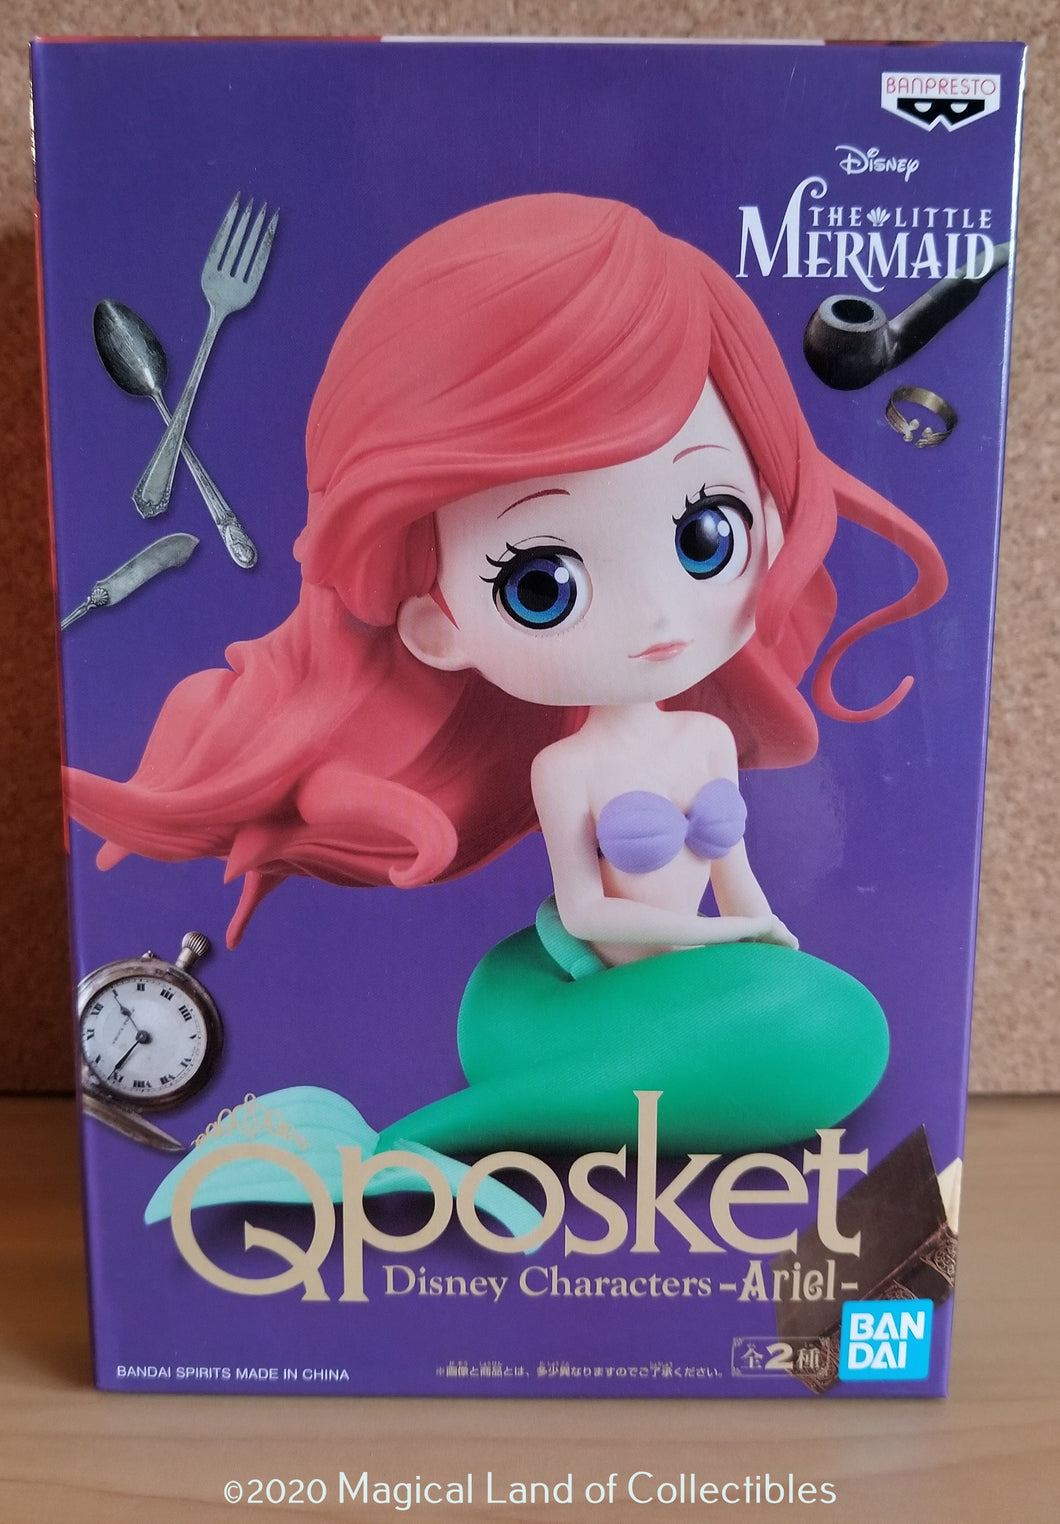 The Little Mermaid Ariel Mermaid Form Q Posket (Variation A - Dark)